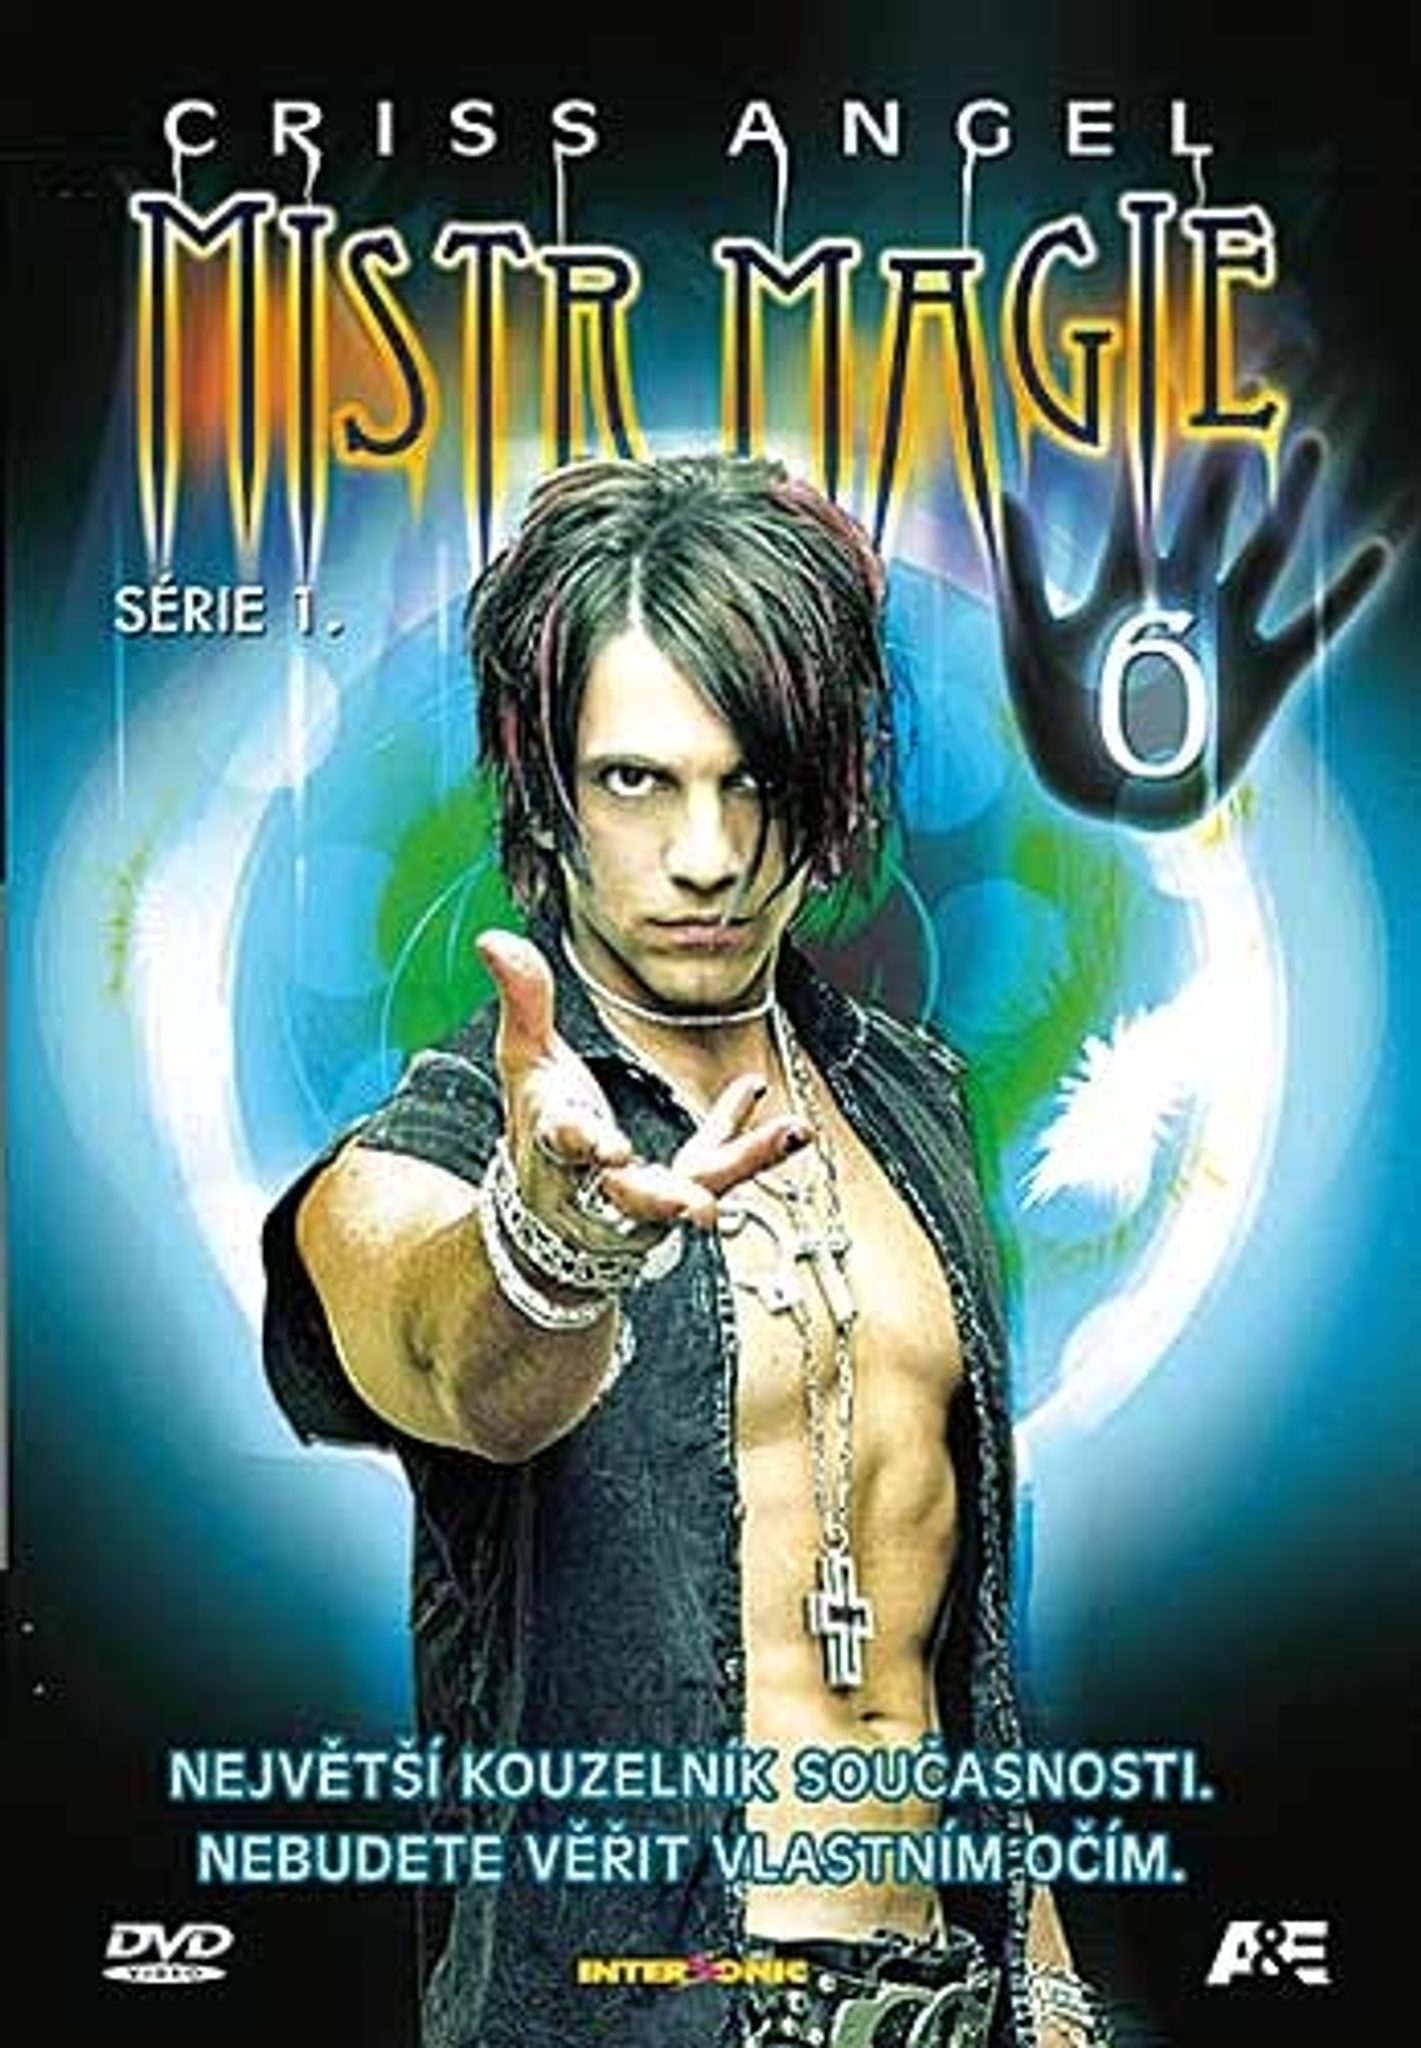 DVD Criss Angel Mistr magie srie 1 6